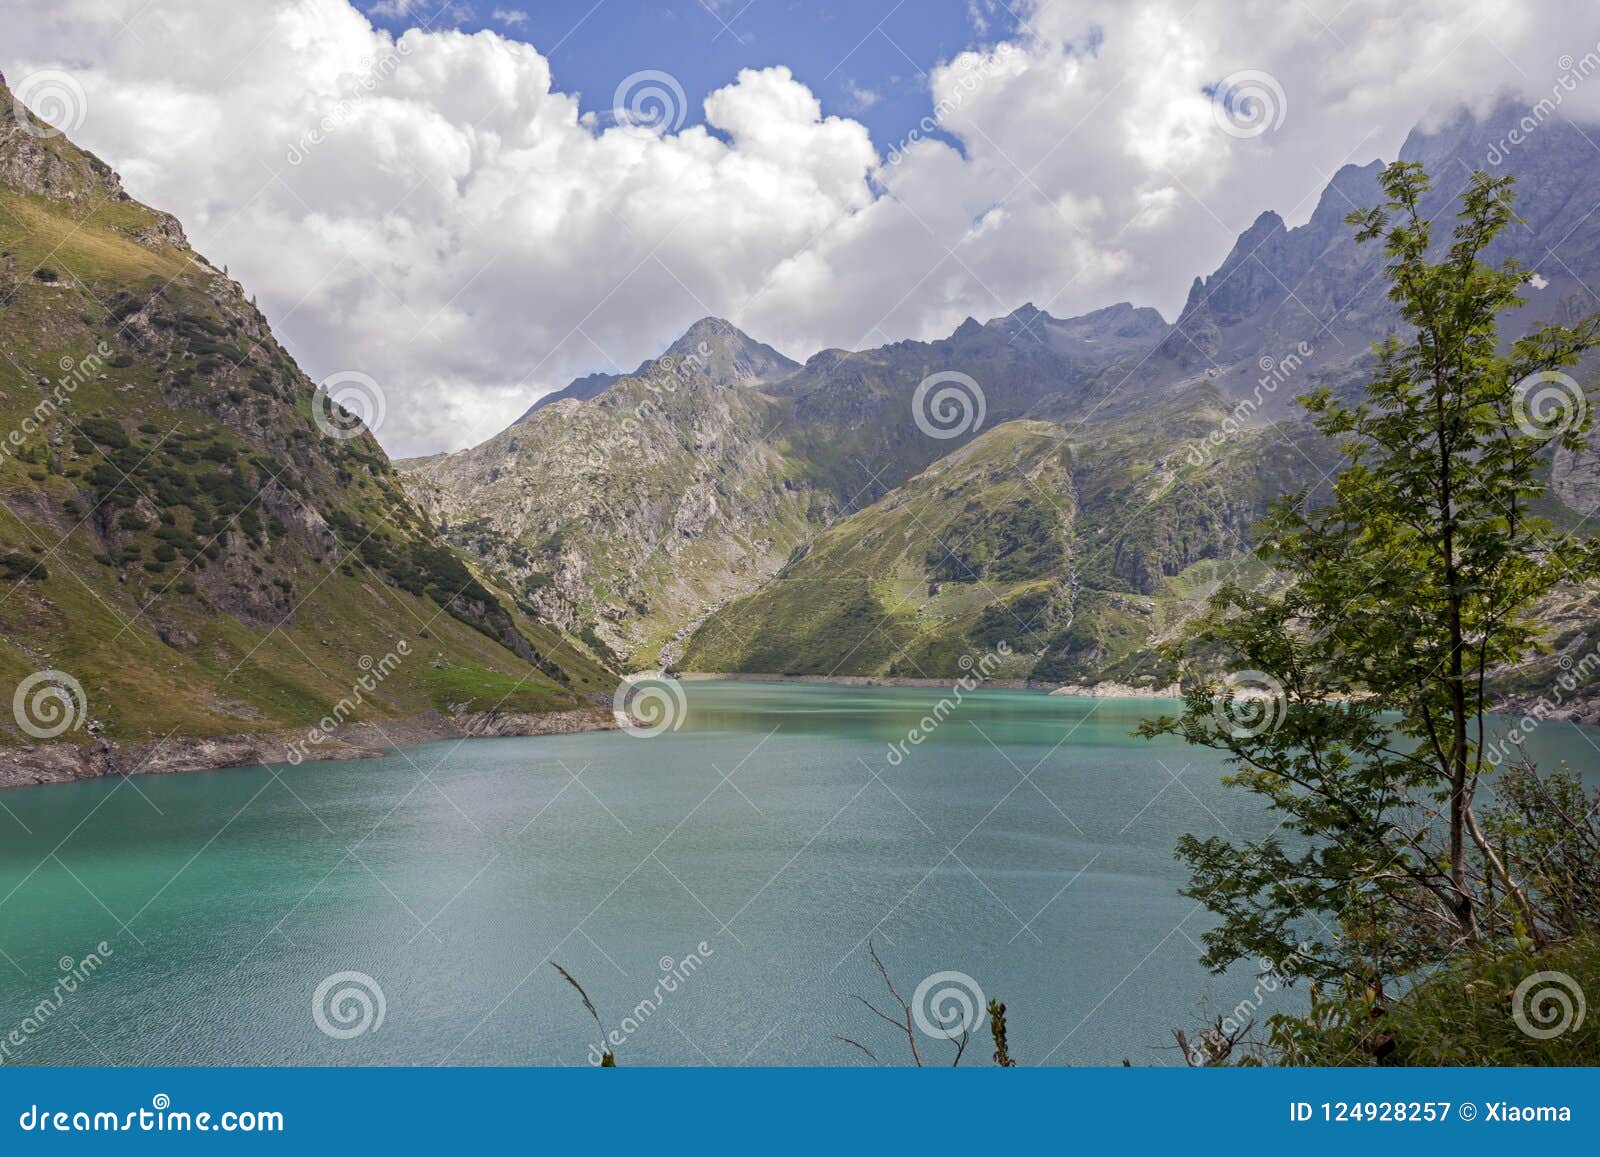 a view of barbellino artificial lake, valbondione,